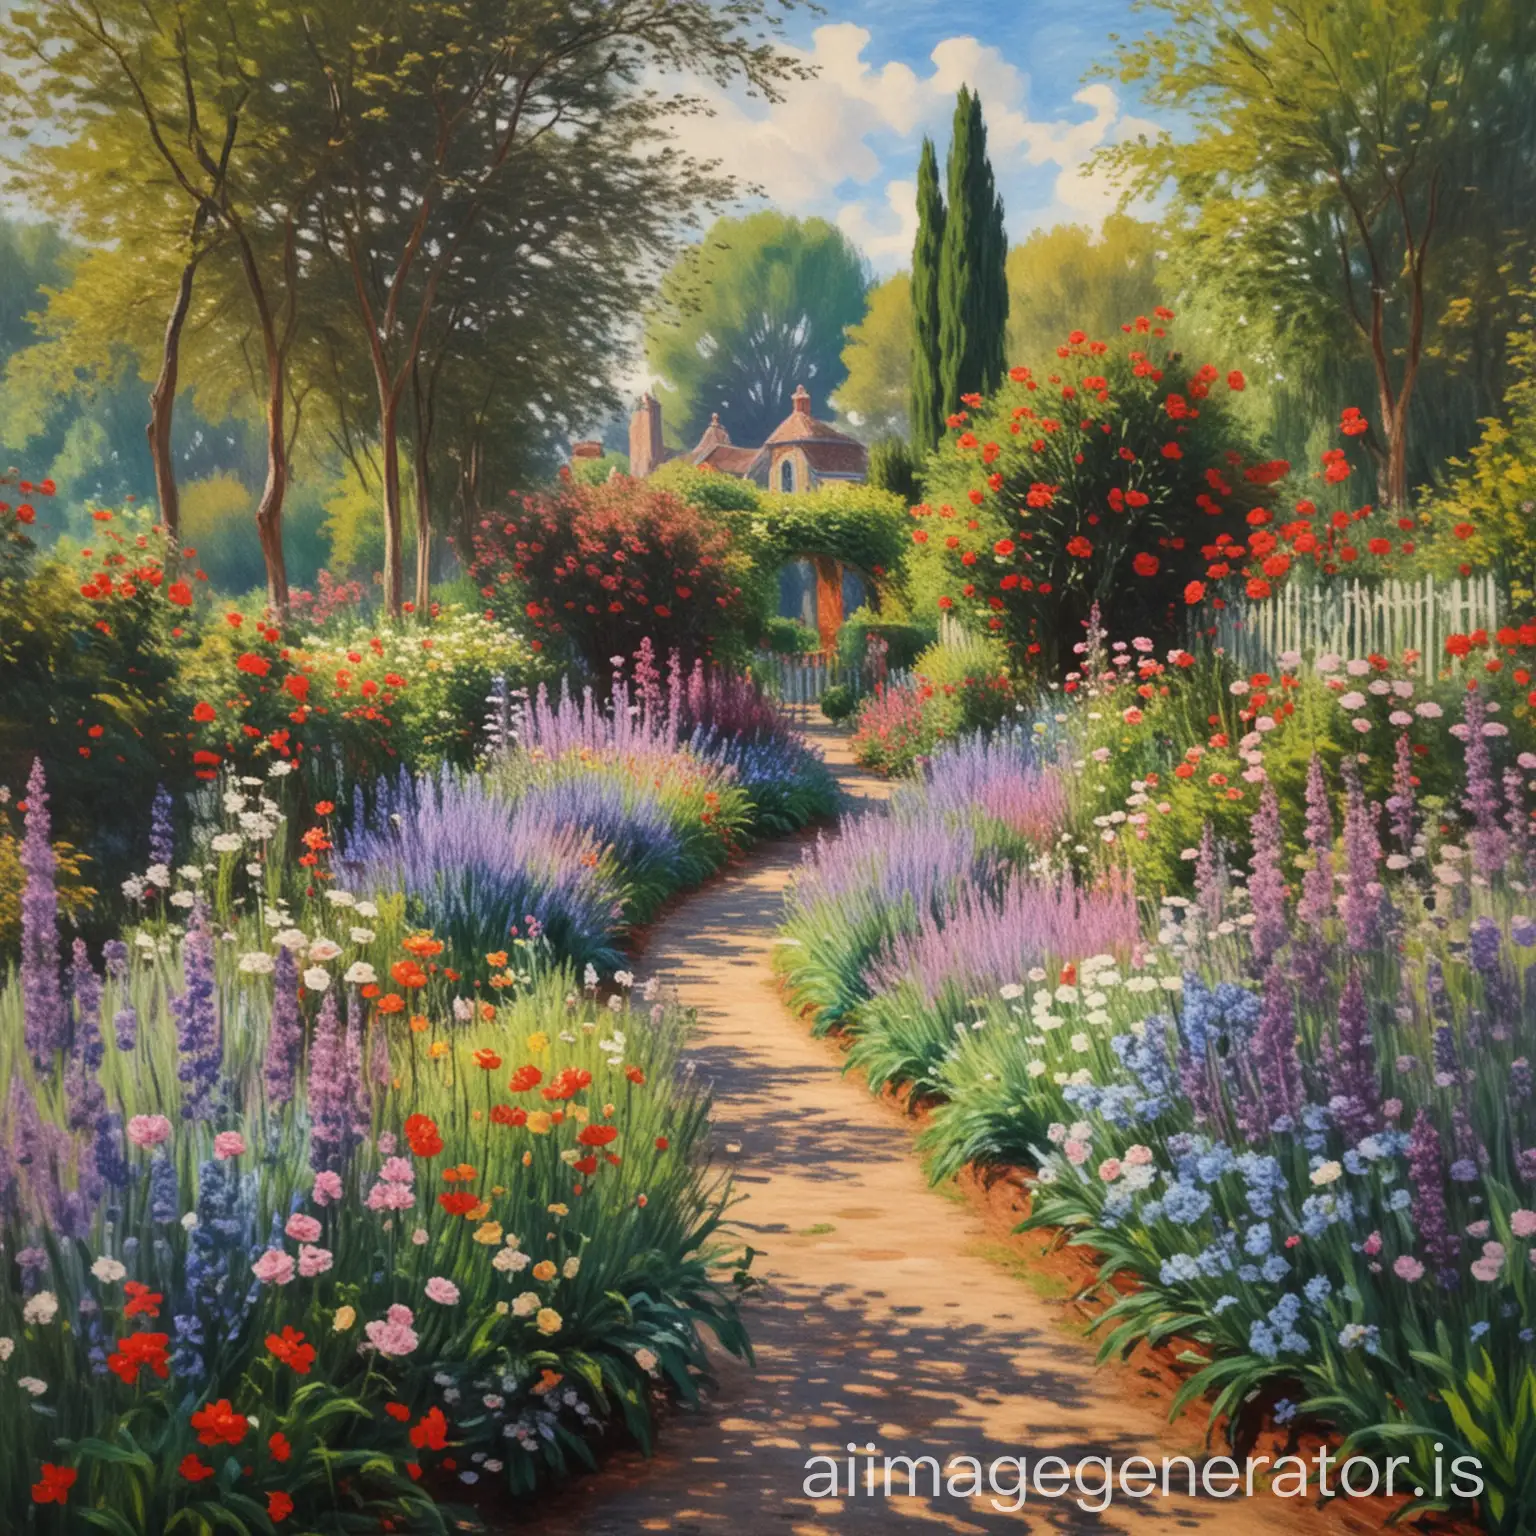 Copy Monet's garden, create a painting